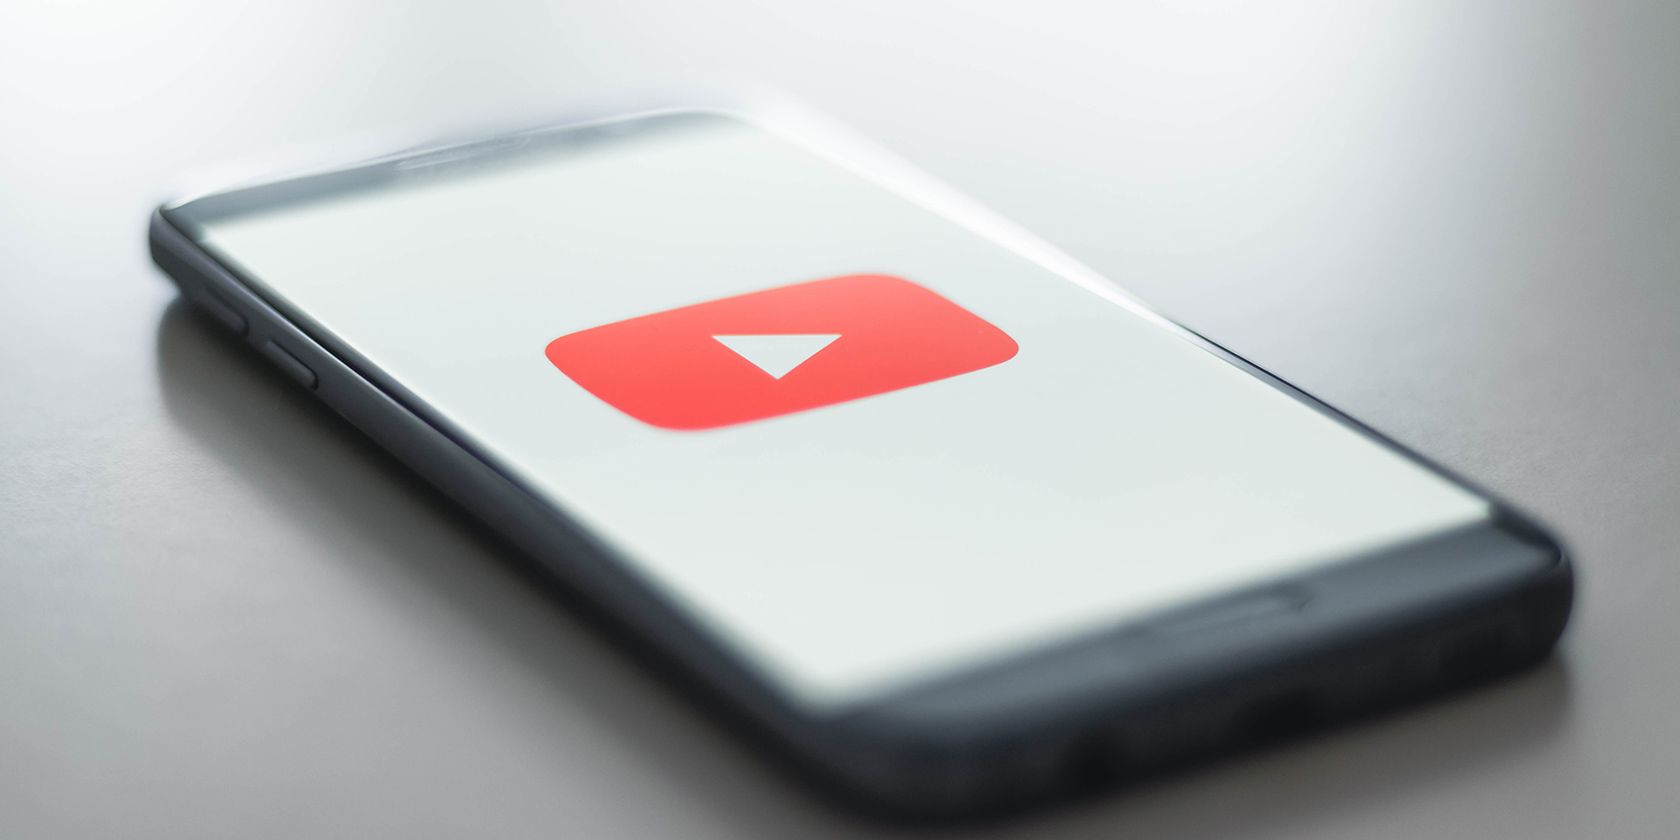 YouTube logo on a phone